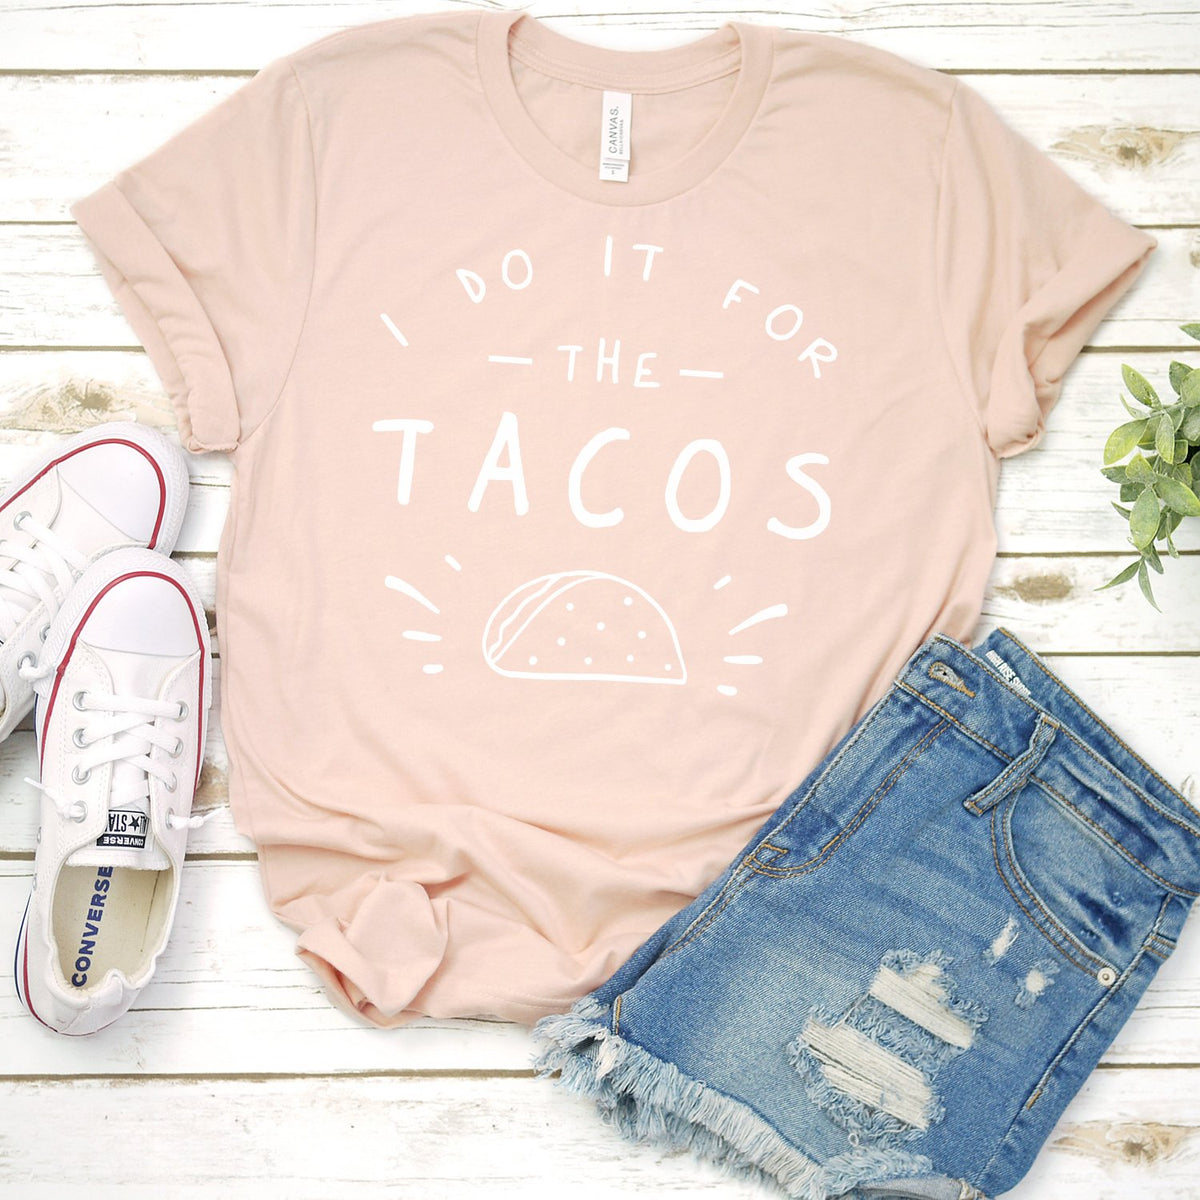 I Do It For The Tacos - Short Sleeve Tee Shirt